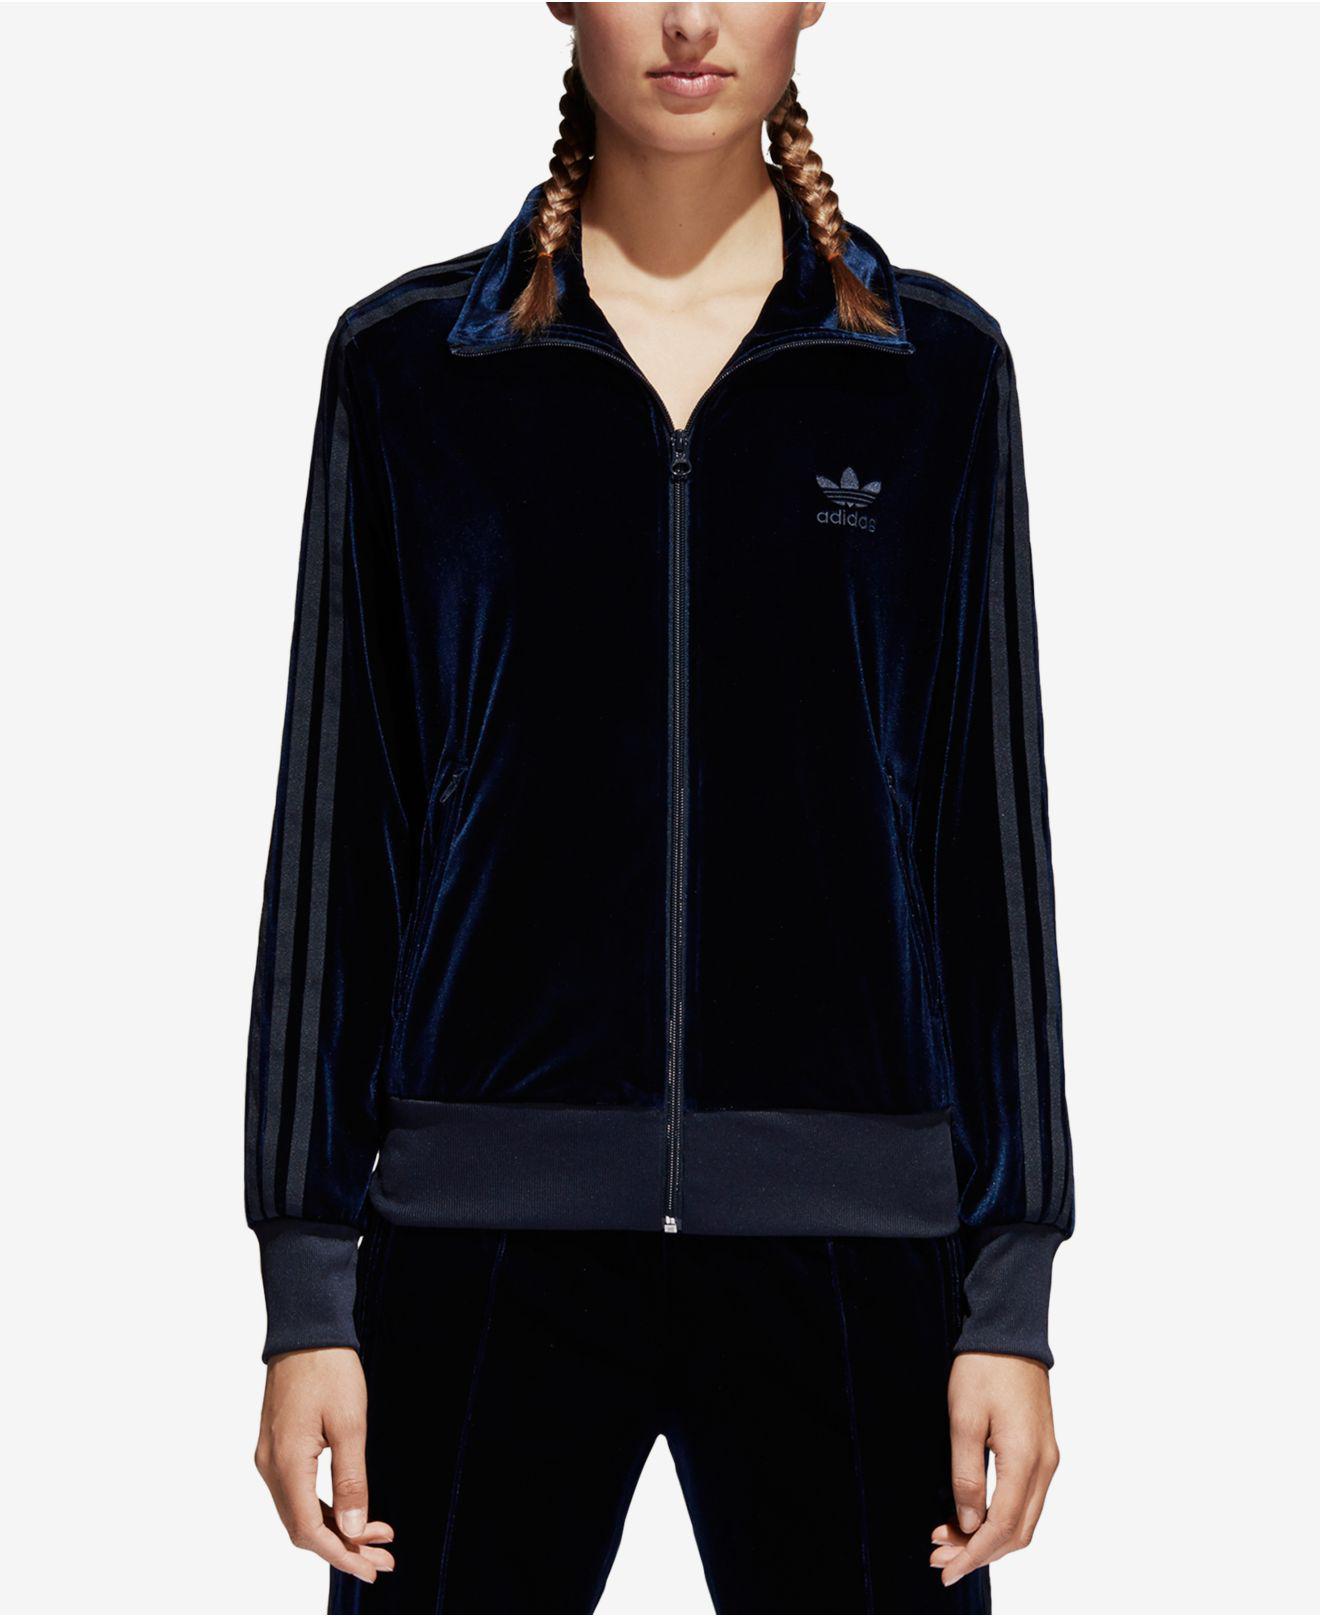 adidas firebird track jacket velvet